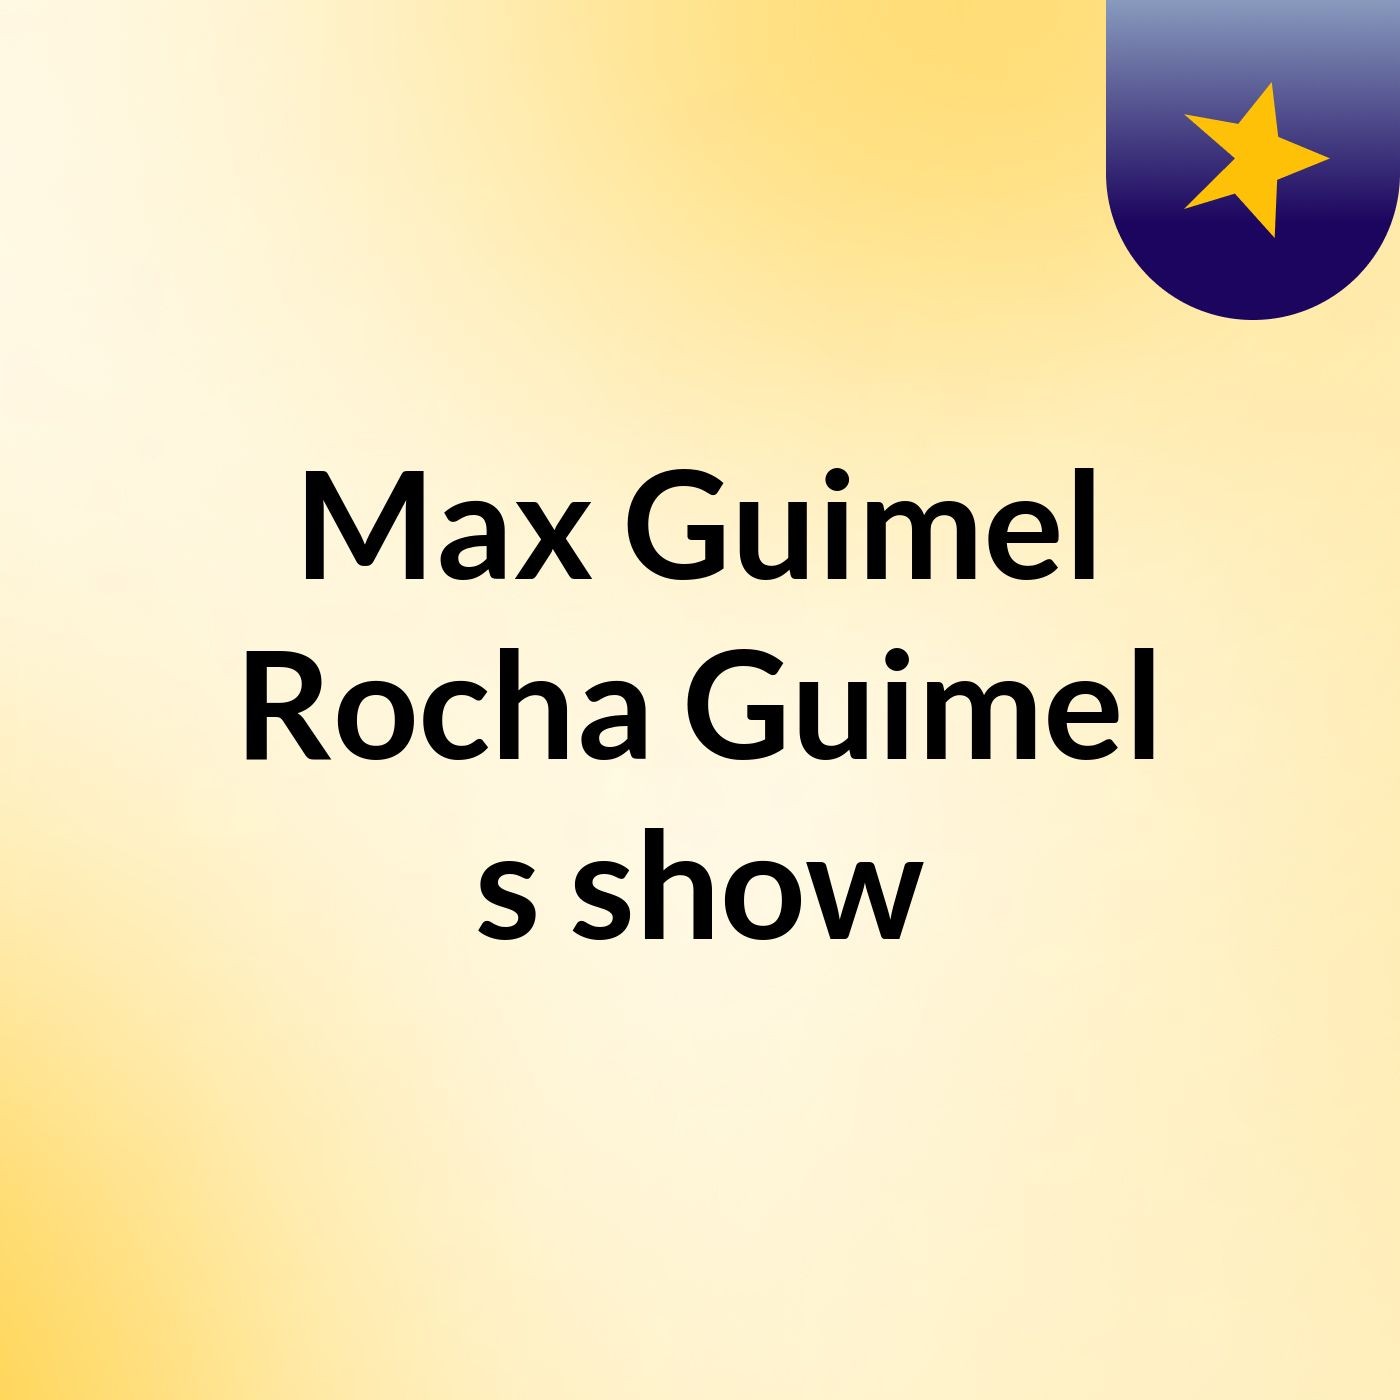 Max Guimel Rocha Guimel's show